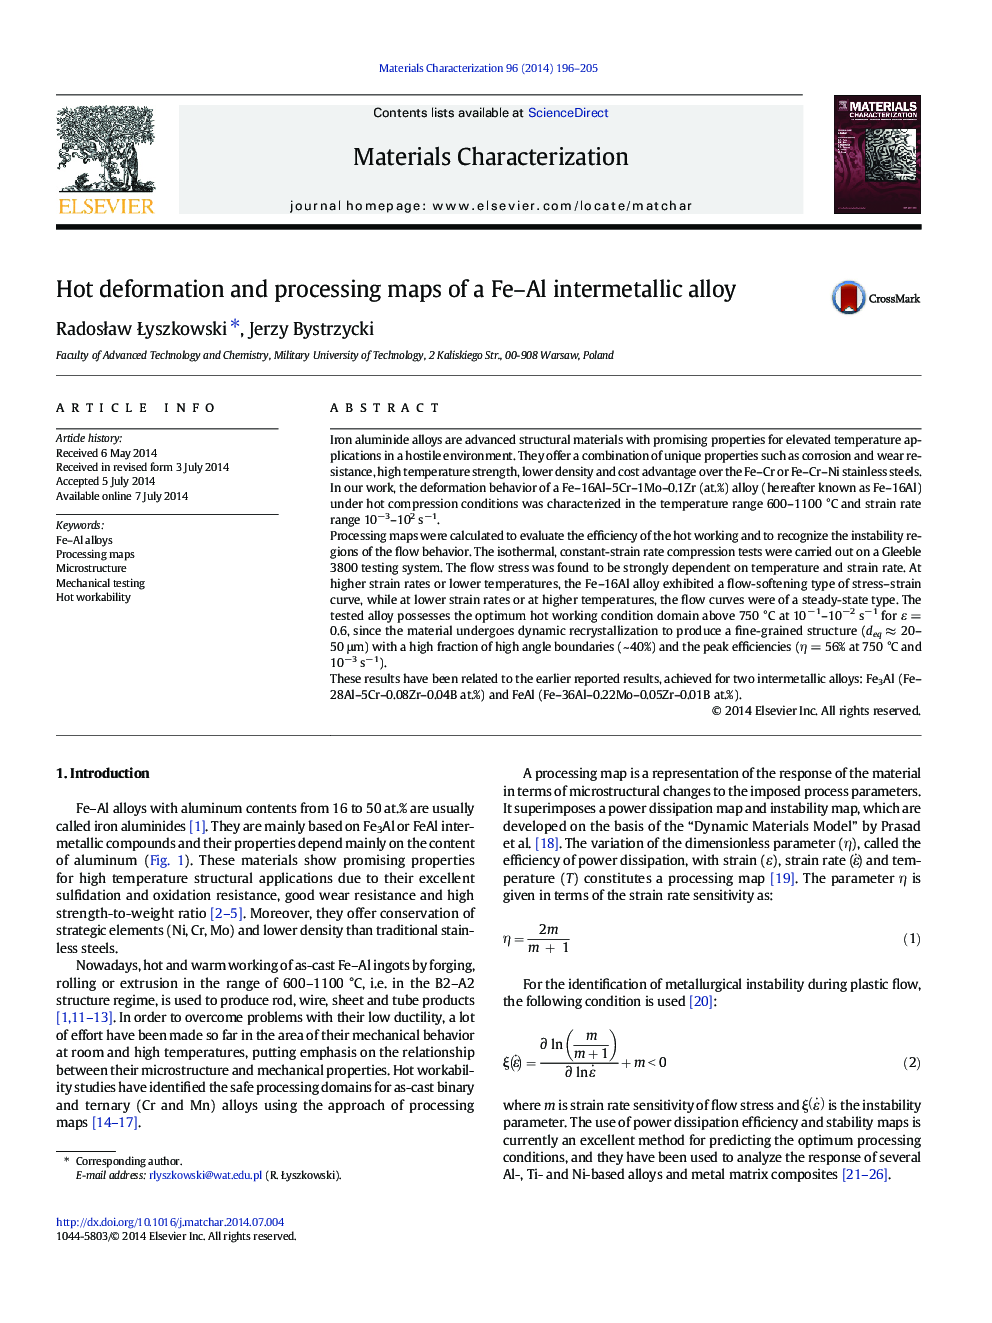 Hot deformation and processing maps of a Fe–Al intermetallic alloy